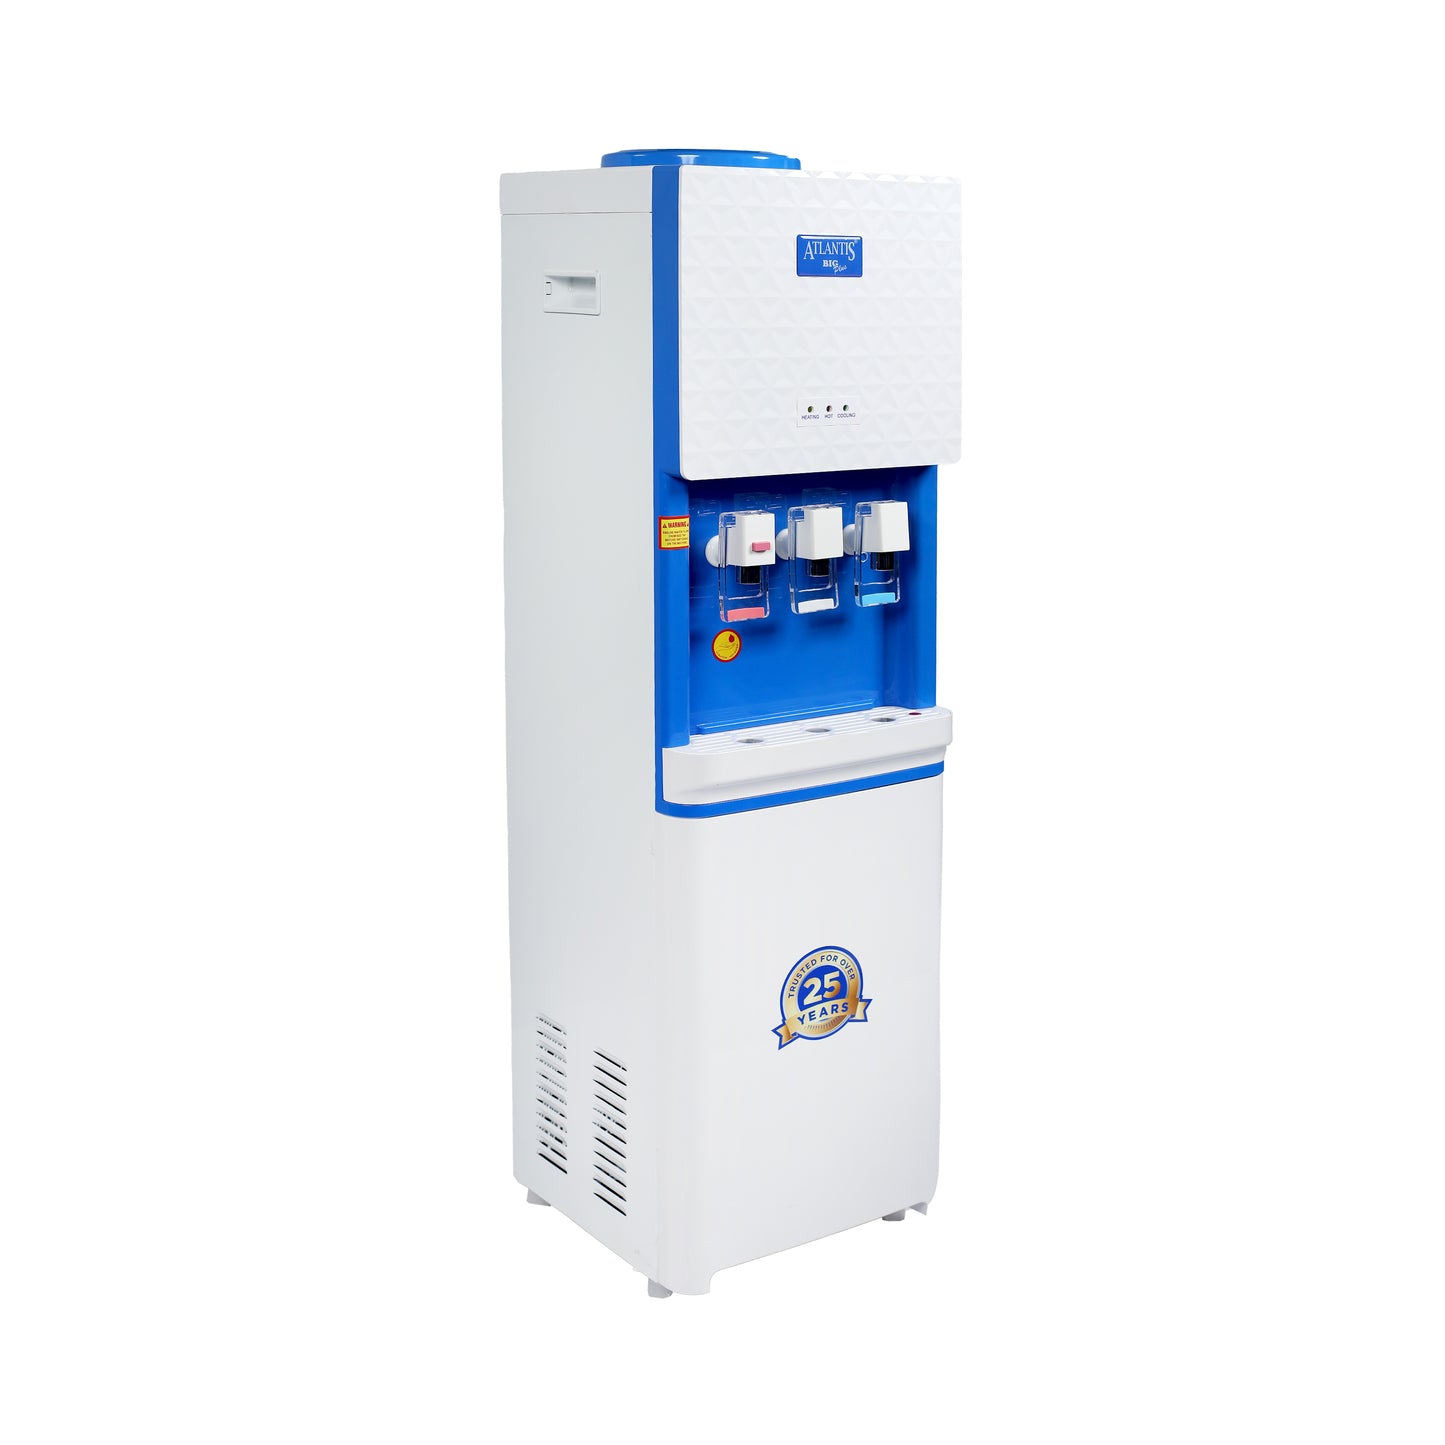 Atlantis BIG PLUS Water Dispenser | Hot, Cold and Normal Water Dispenser